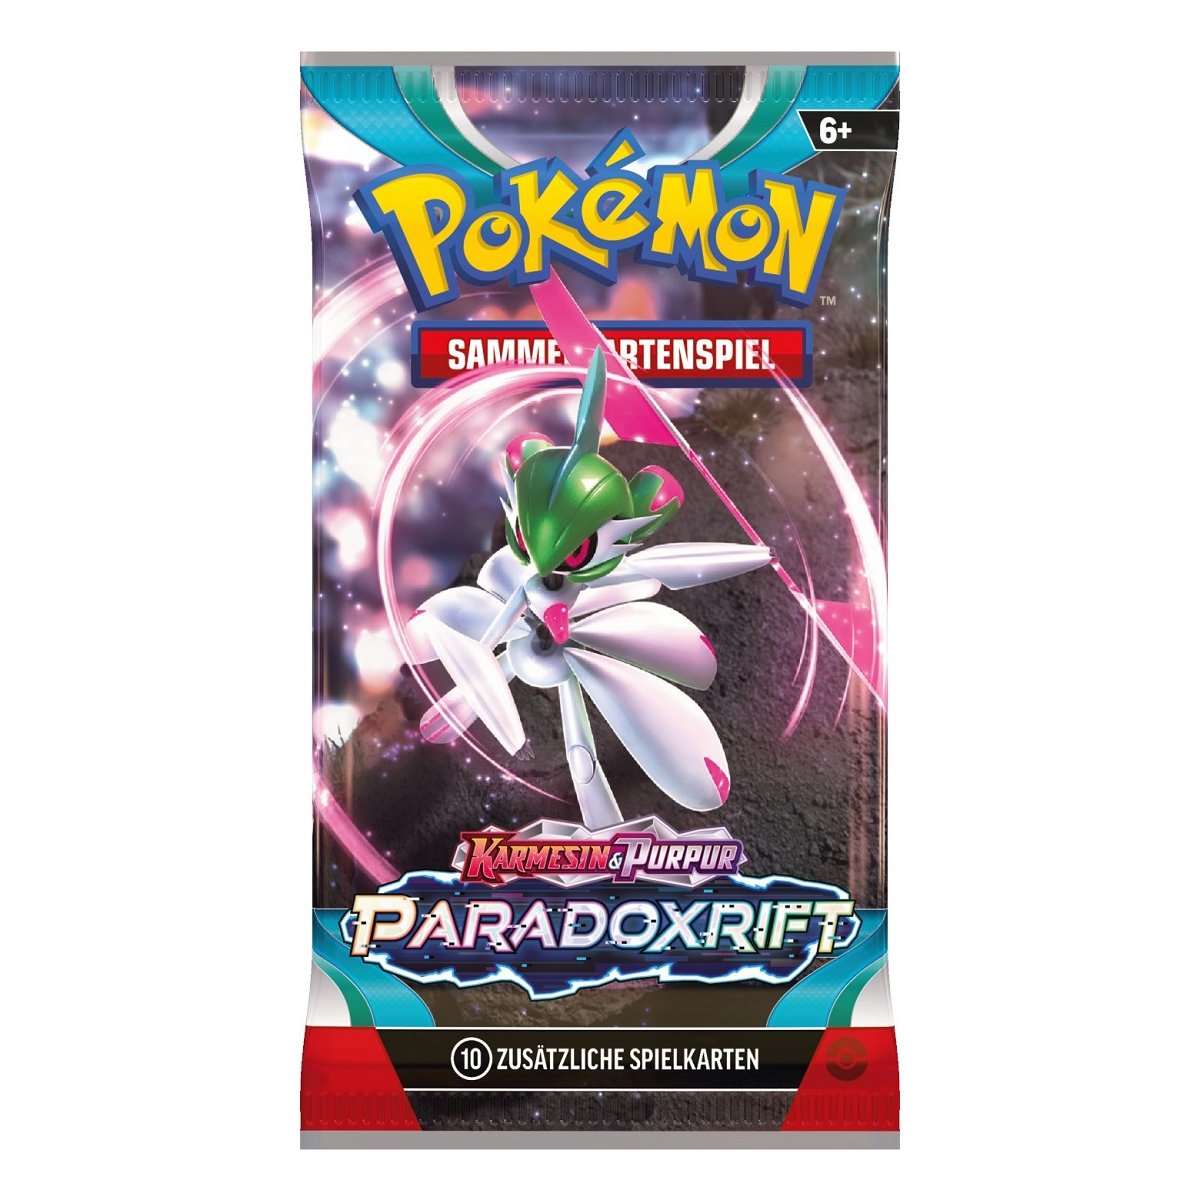 Pokémon Karmesin & Purpur Paradoxrift Booster DE